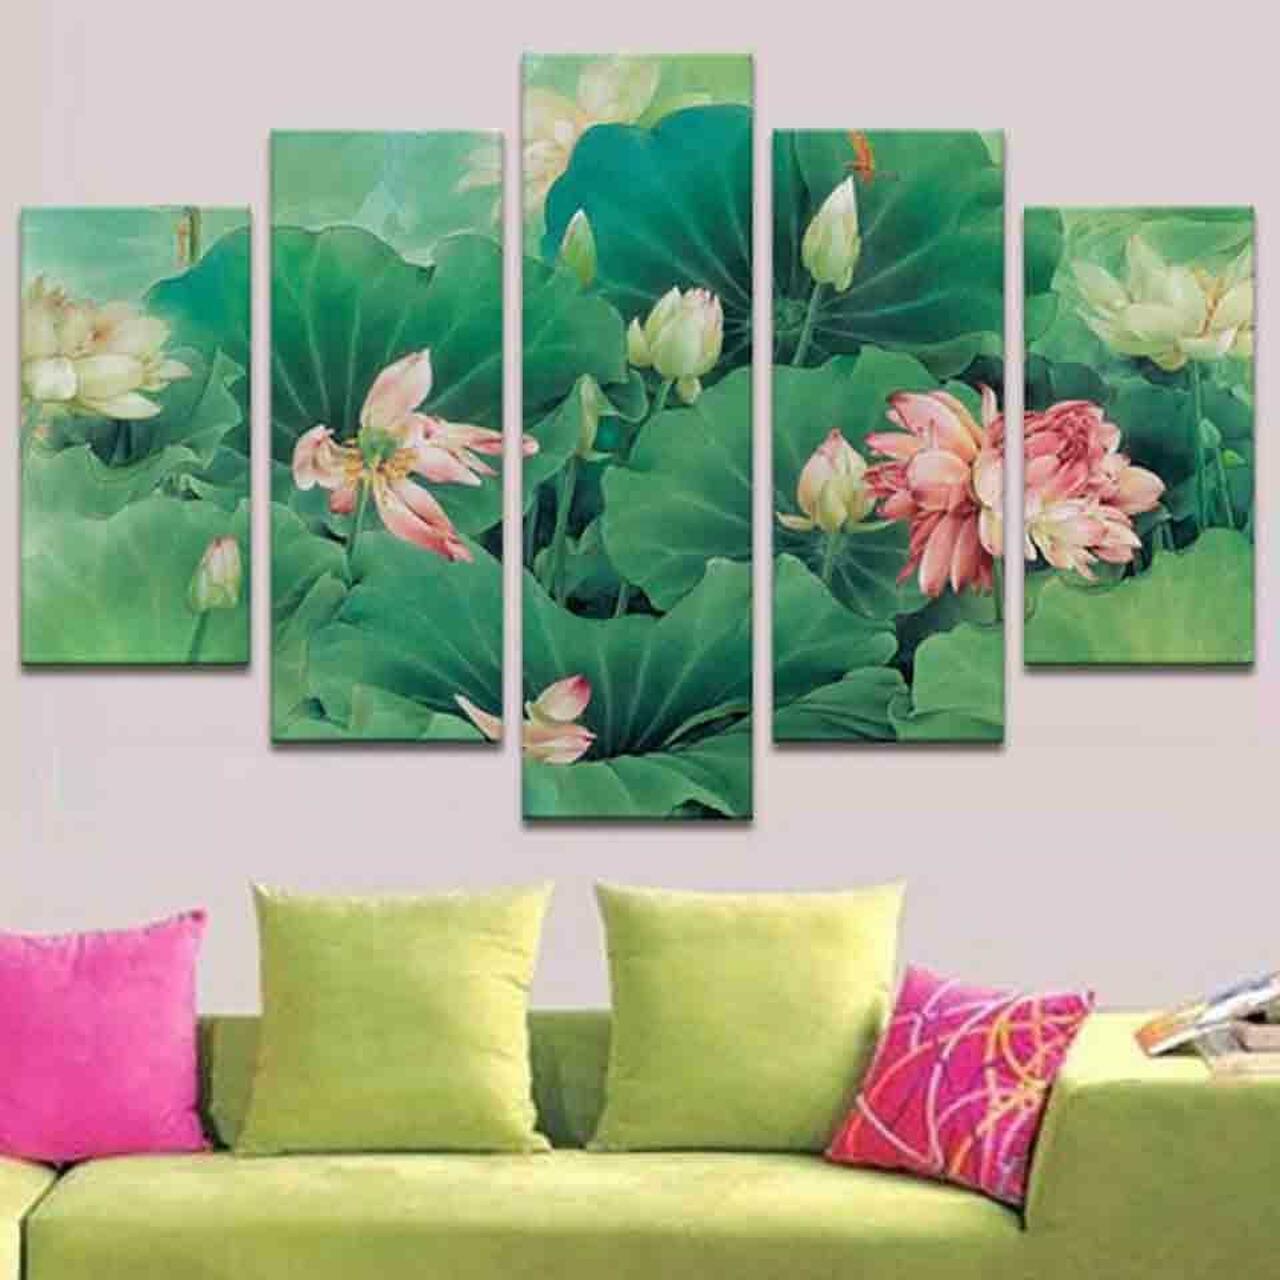 Lotus in Bloom 5 Piece Canvas Art Wall Decor